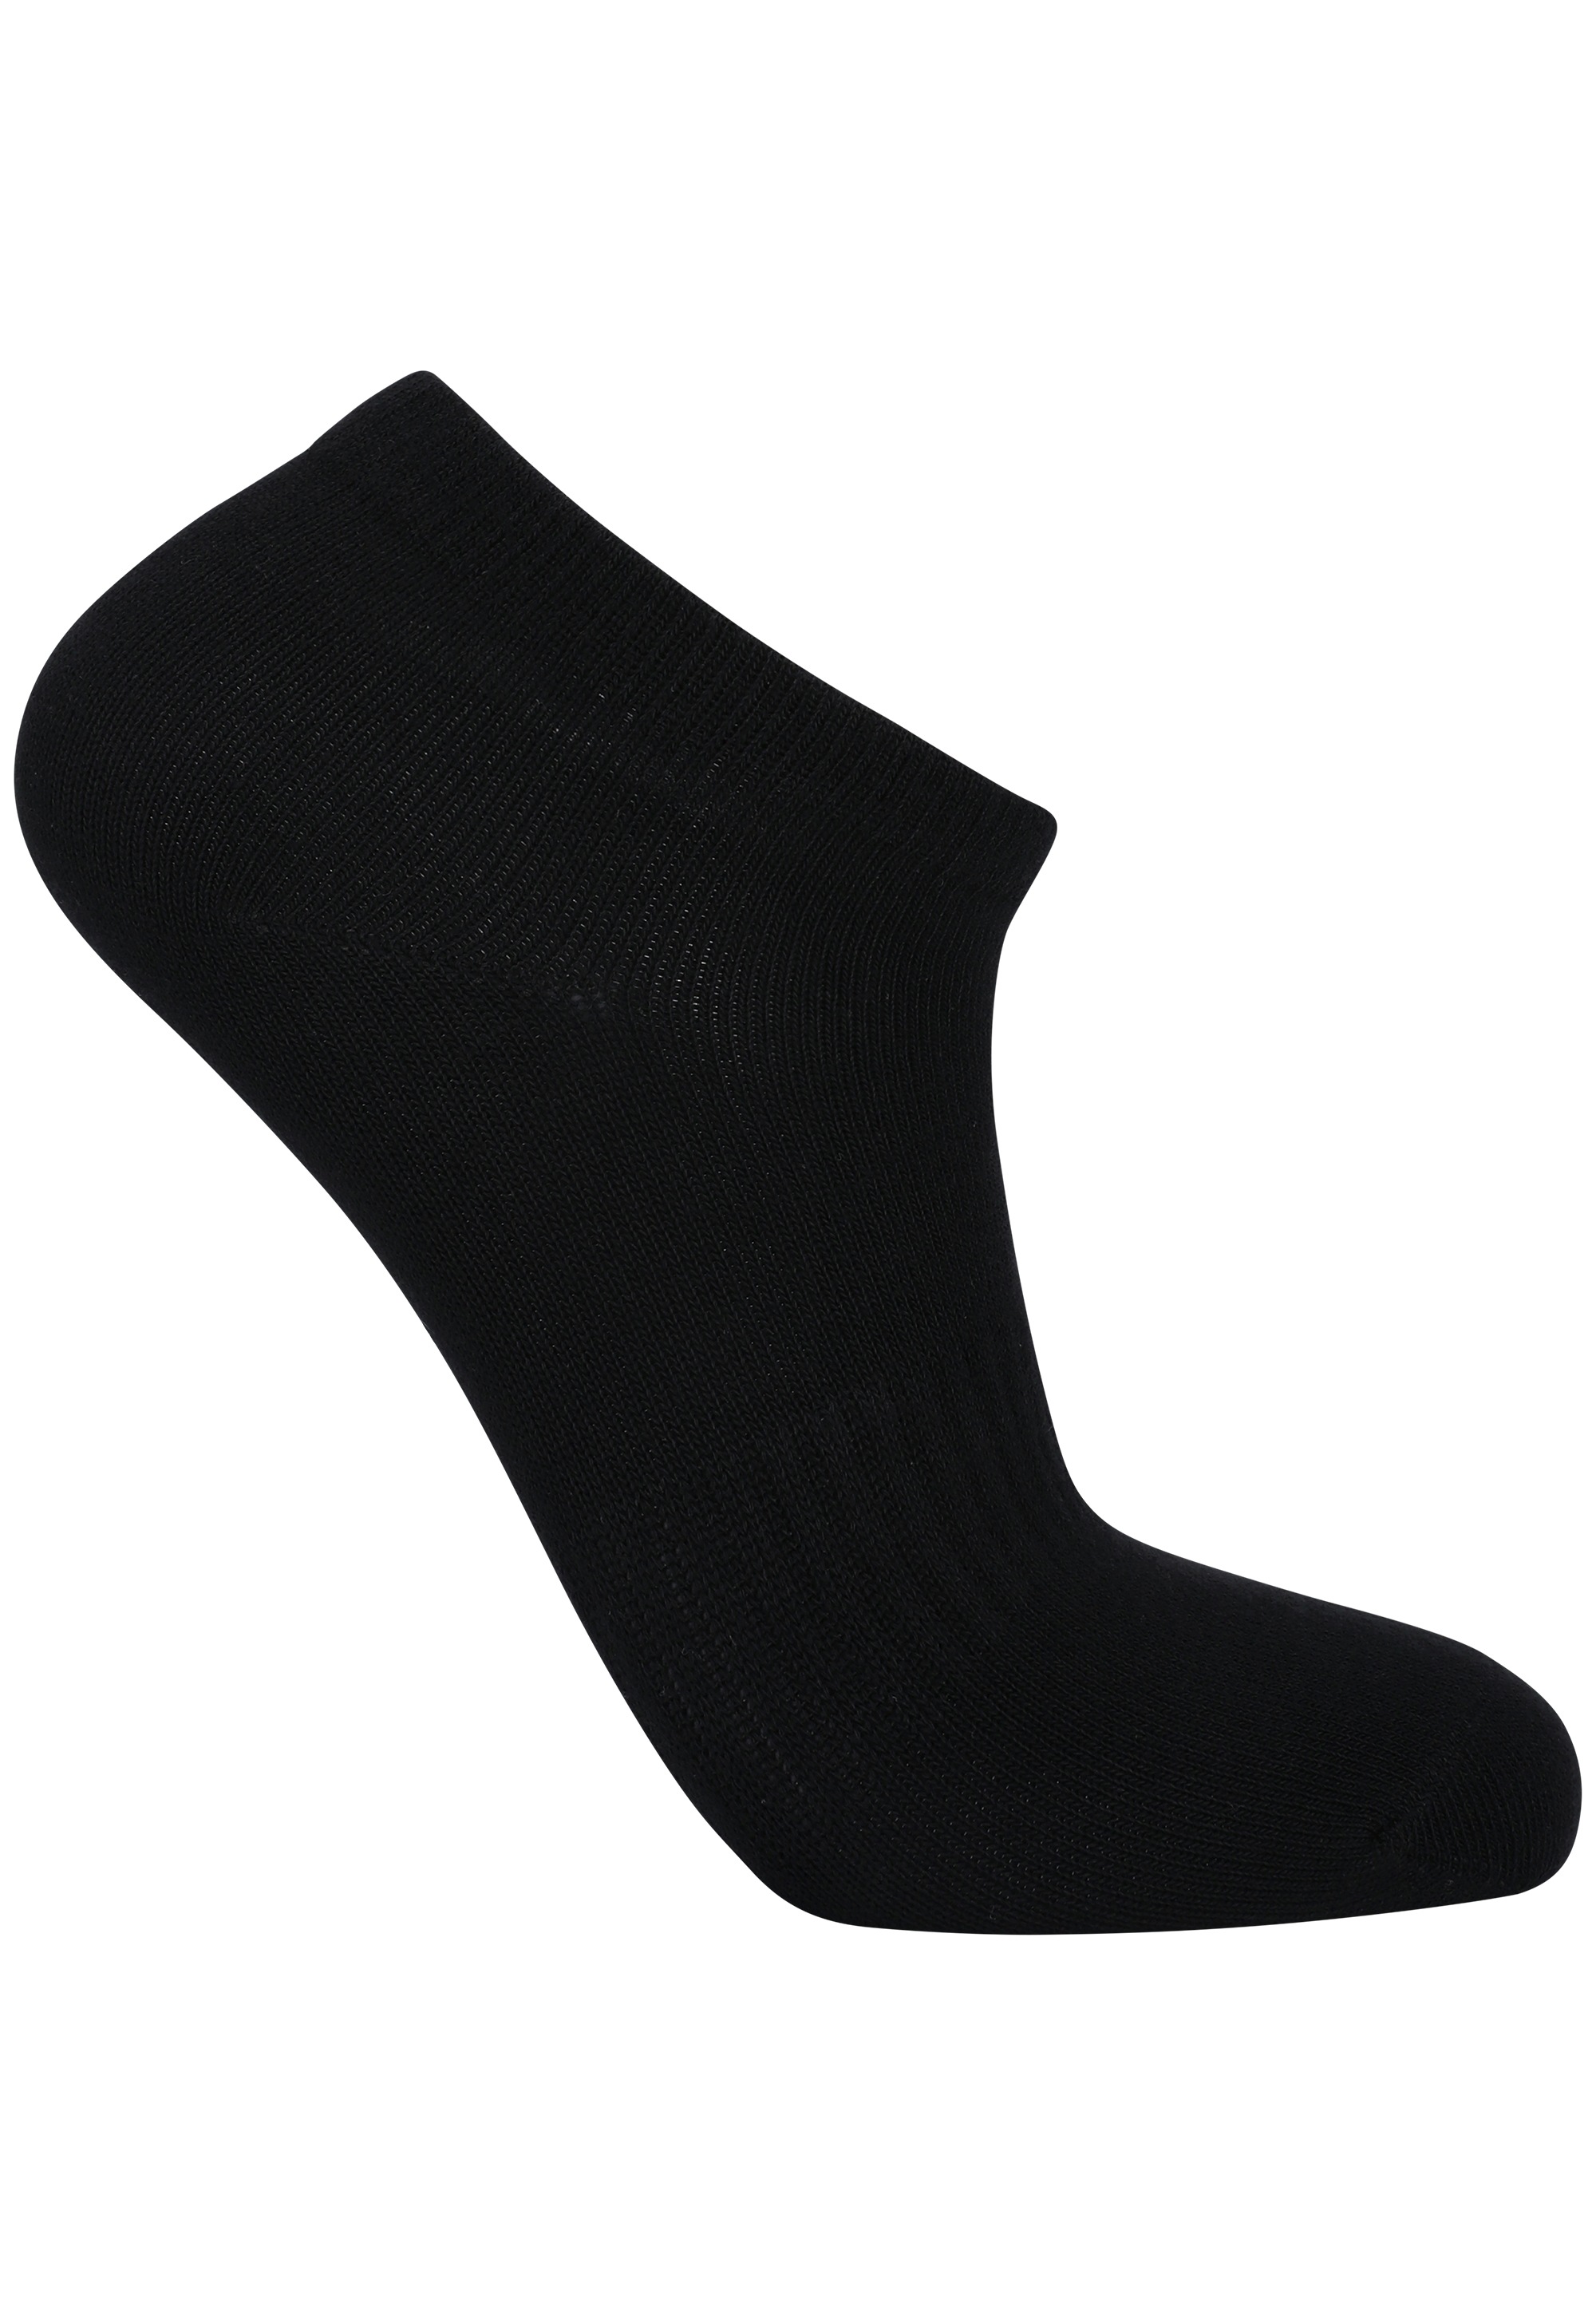 ATHLECIA Socken »Daily«, 3er-Pack mit atmungsaktivem Material